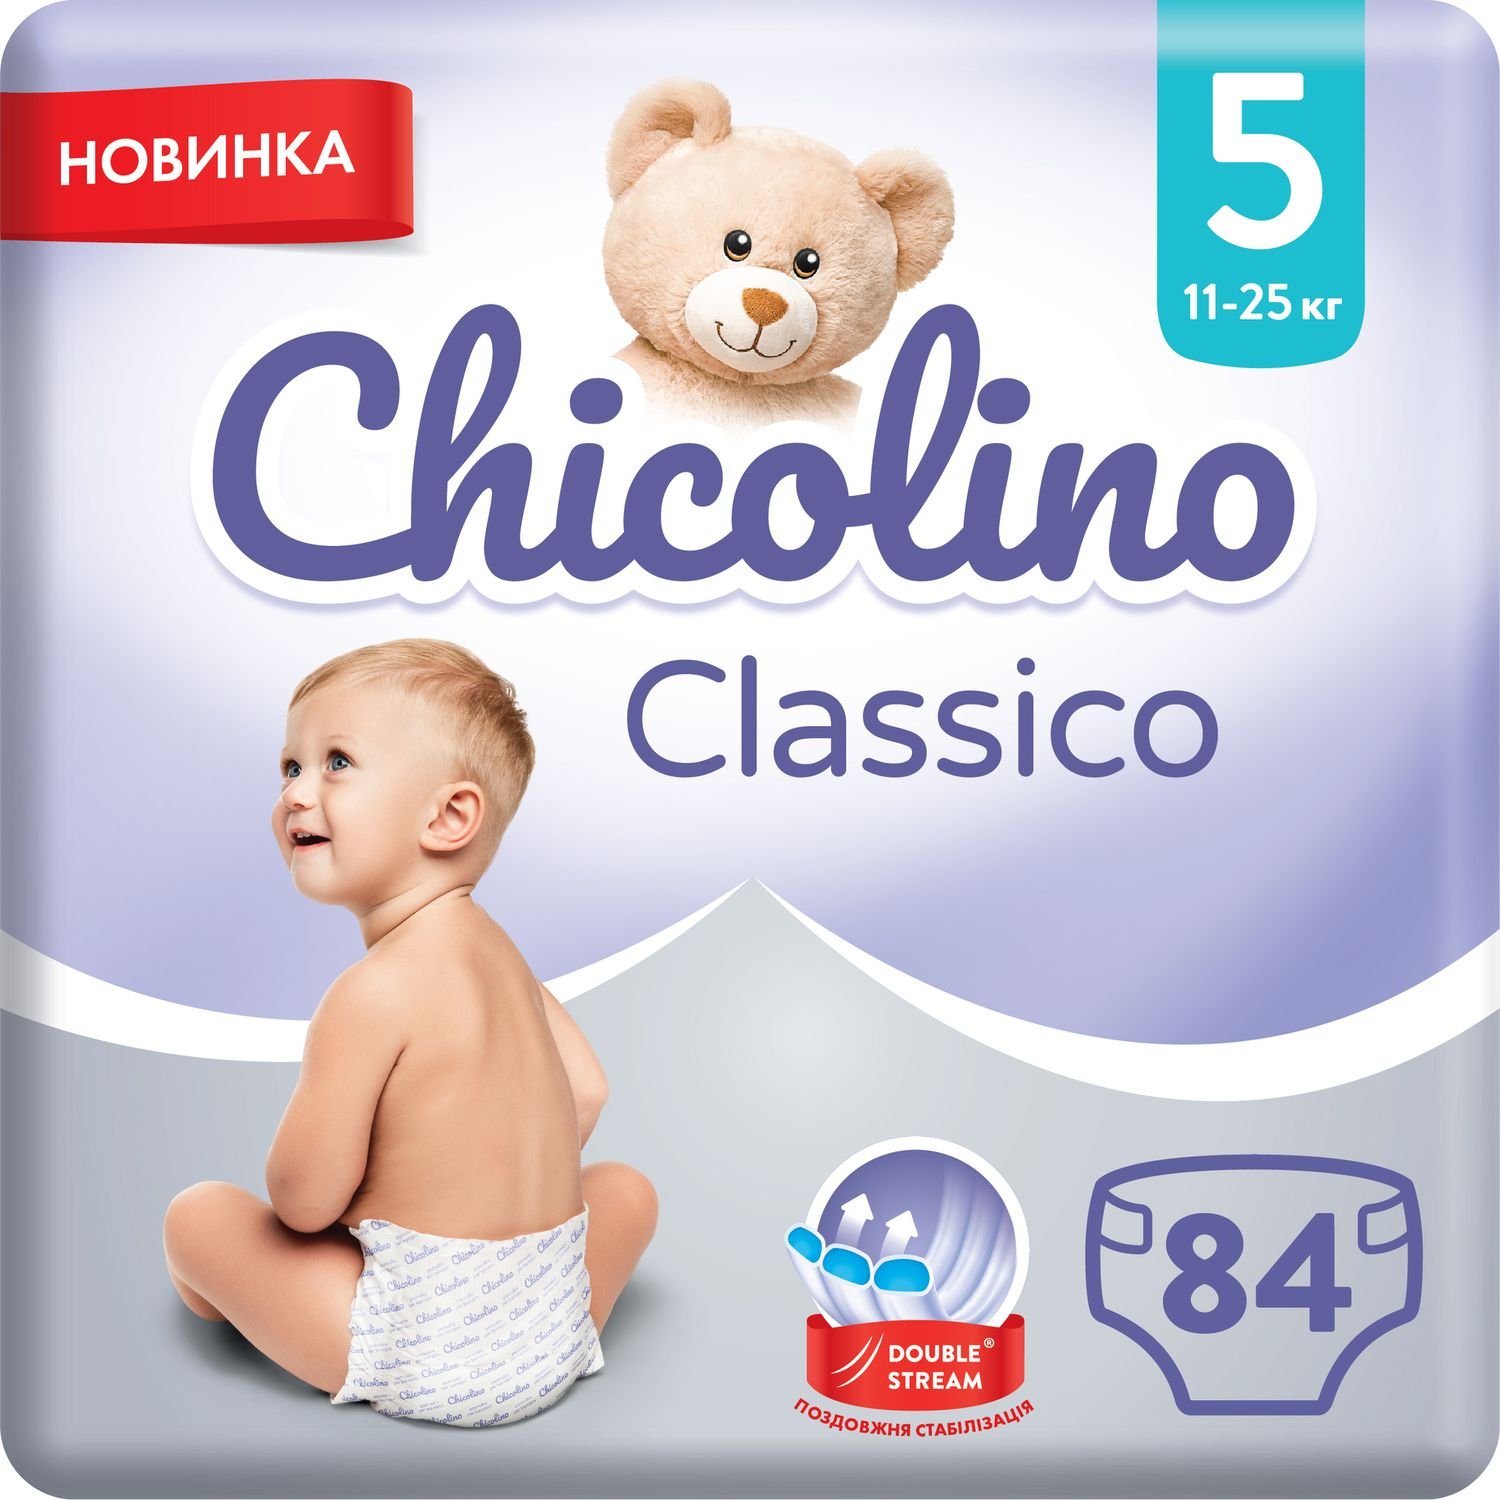 Набор подгузников Chicolino Classico 5 (11-25 кг), 84 шт. (2 уп. по 42 шт.) - фото 1